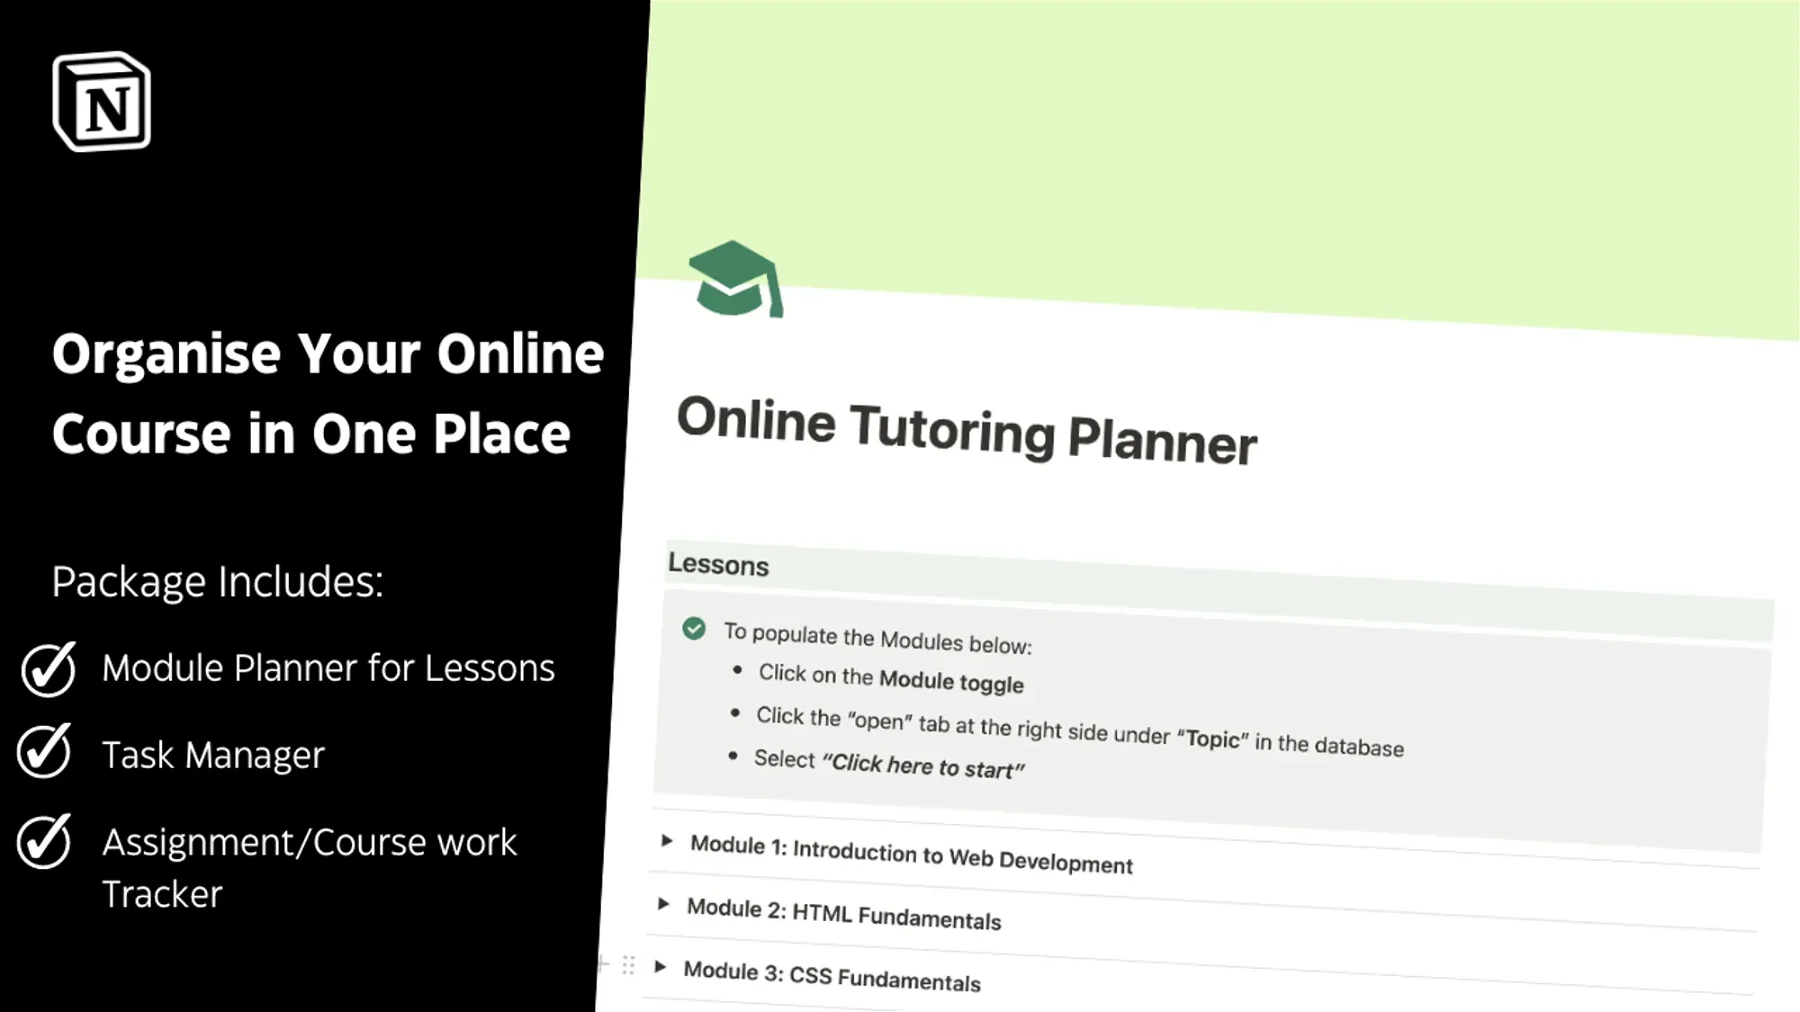 Online Tutoring Planner